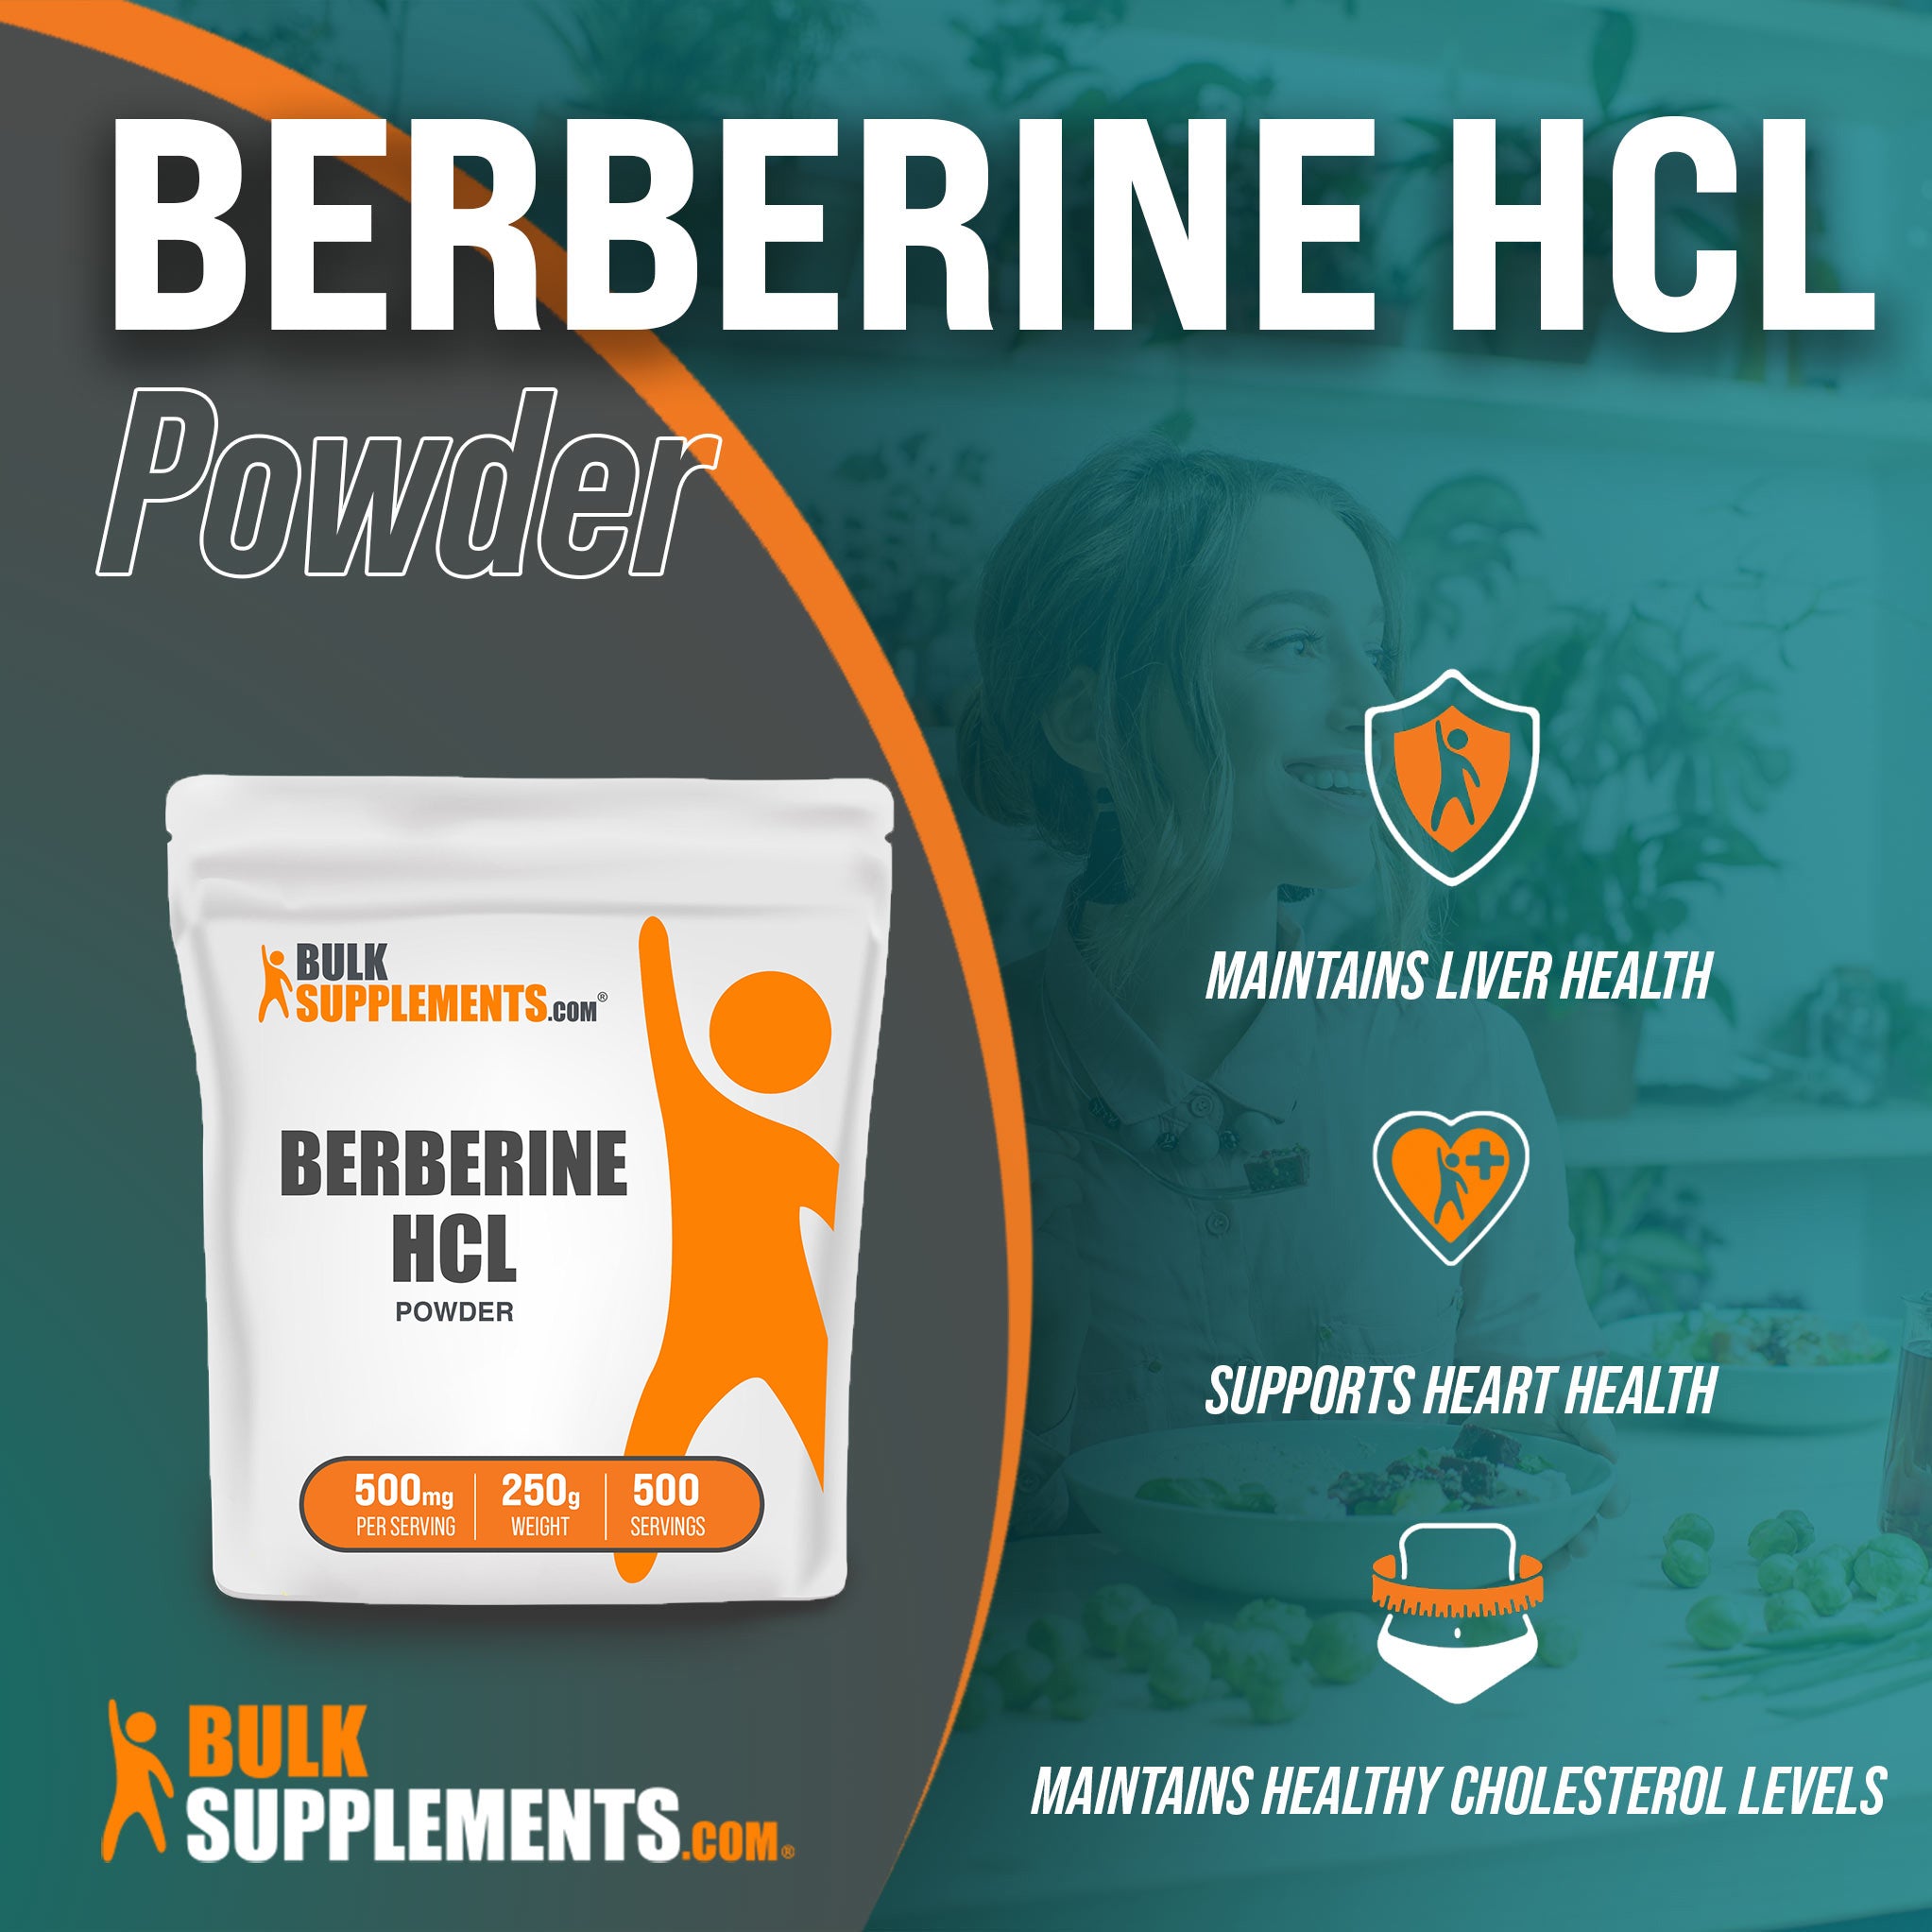 Berberine HCl Powder from Bulk Supplements